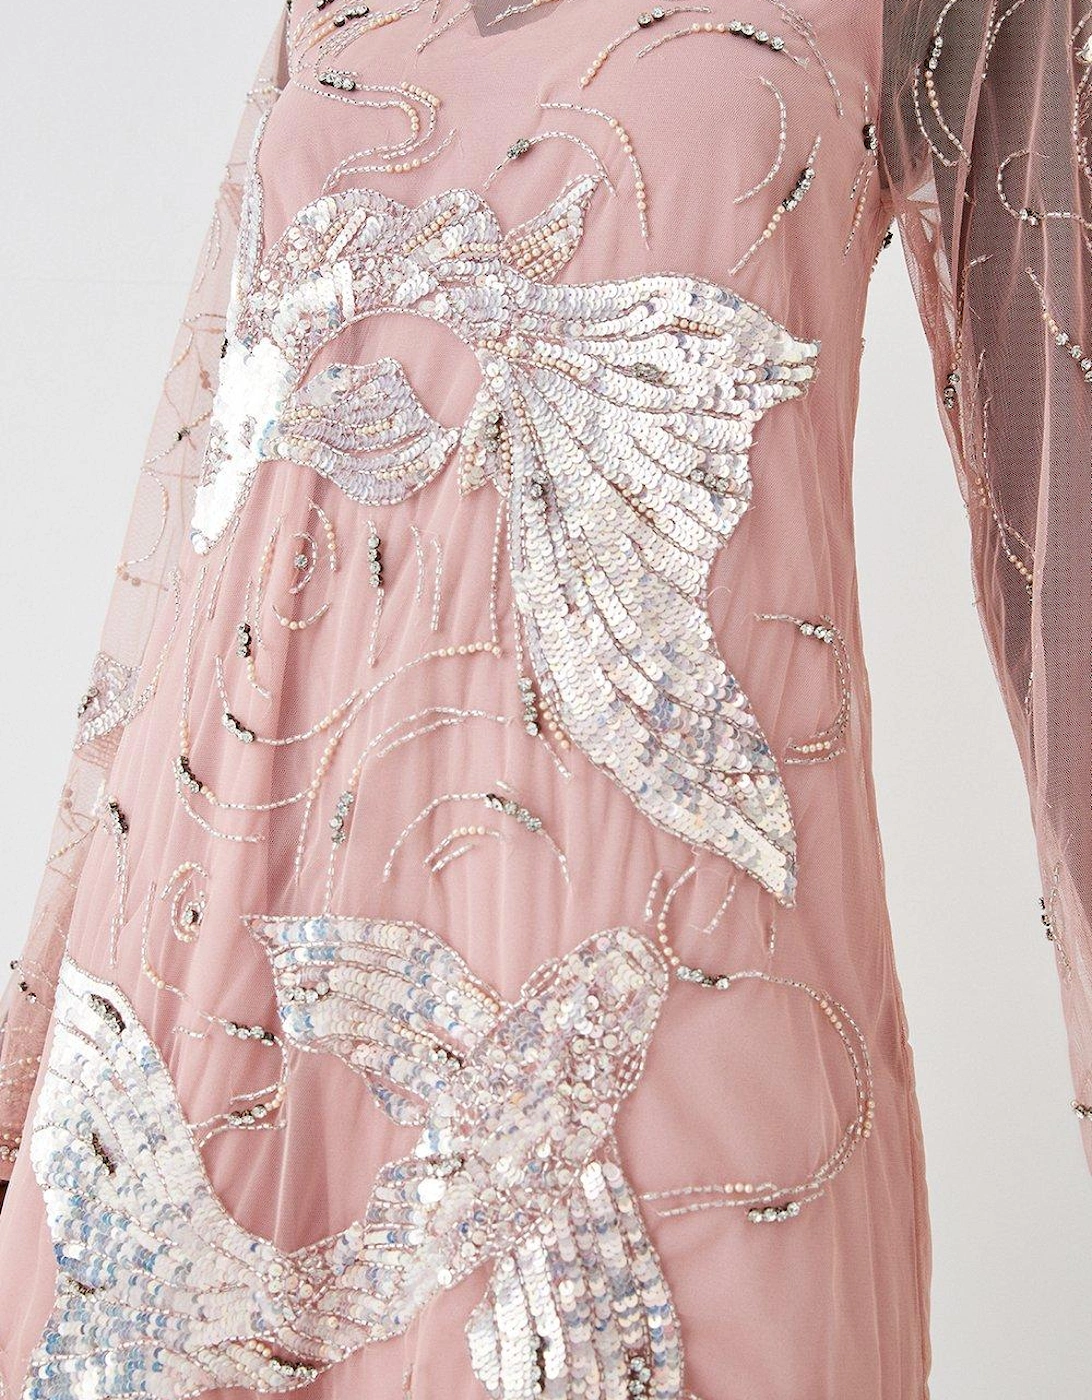 Koi Carp Hand Embellished Mini Dress